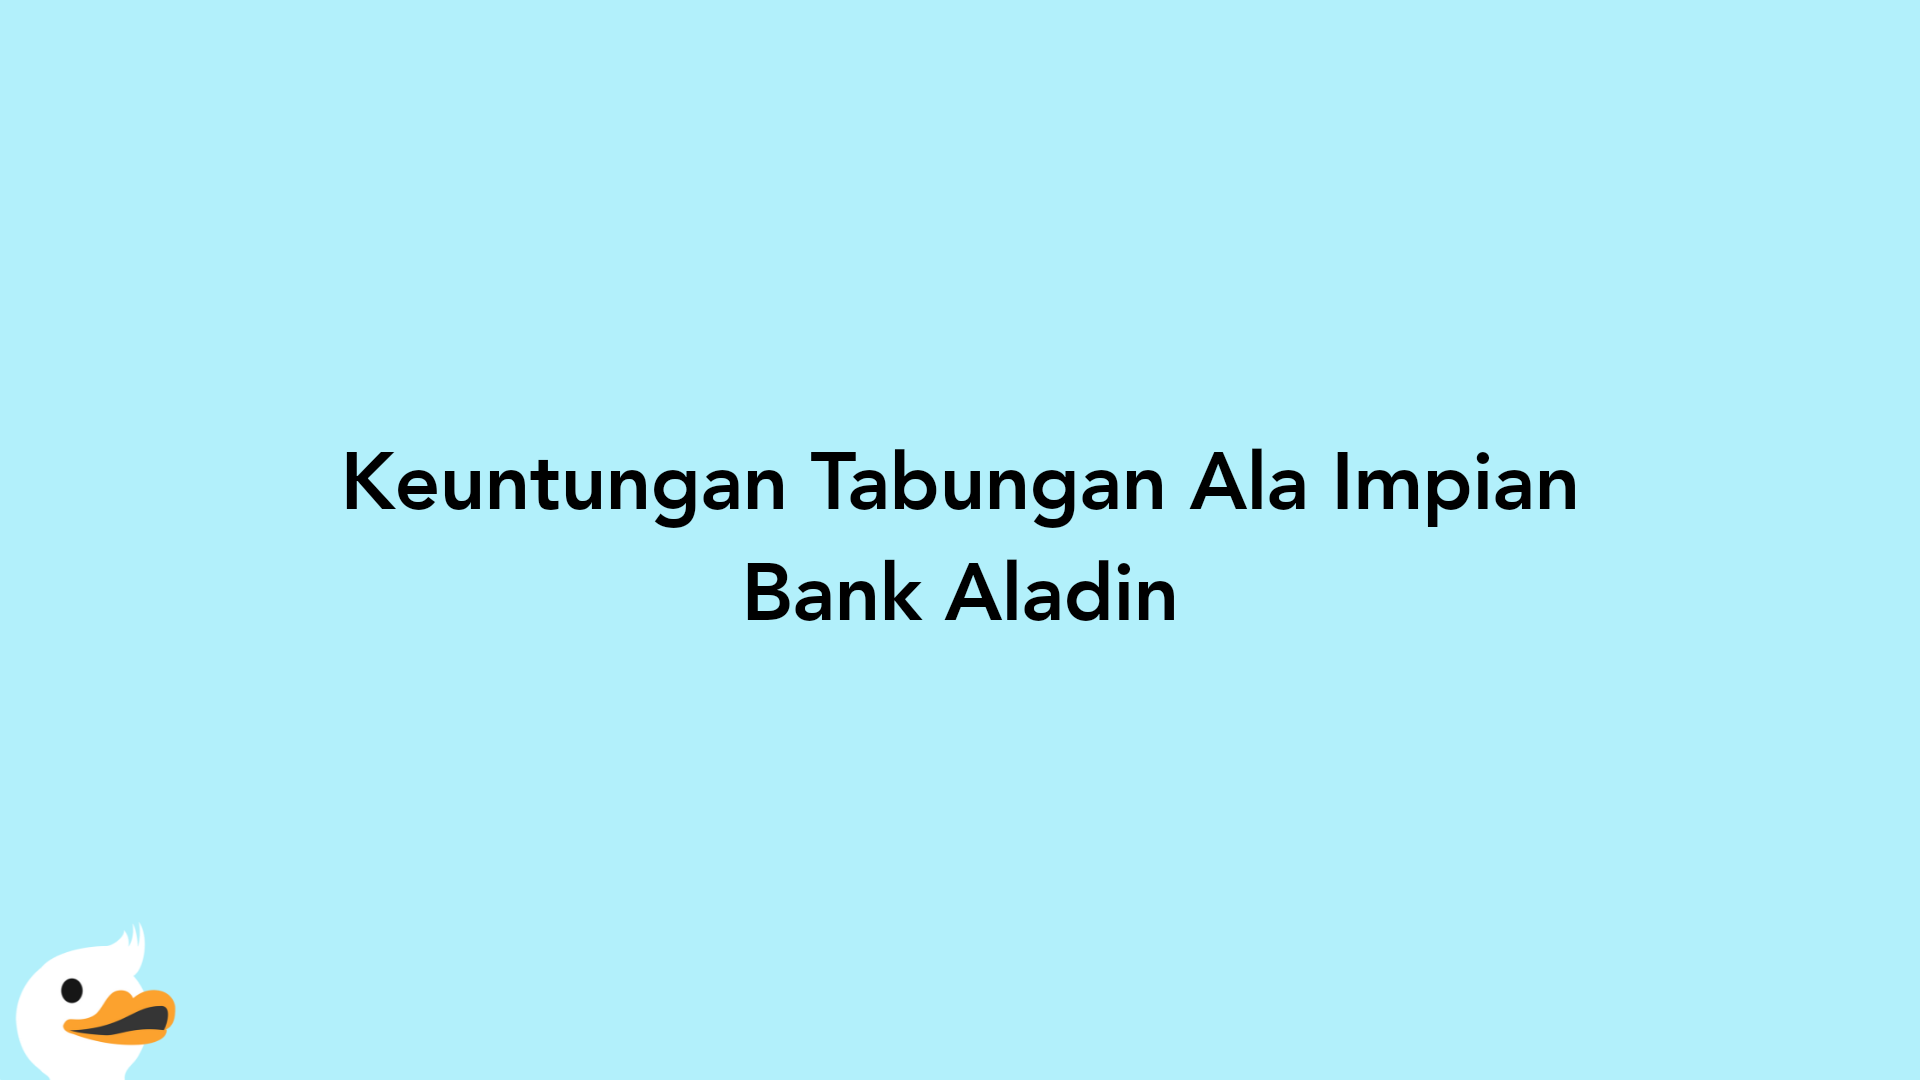 Keuntungan Tabungan Ala Impian Bank Aladin